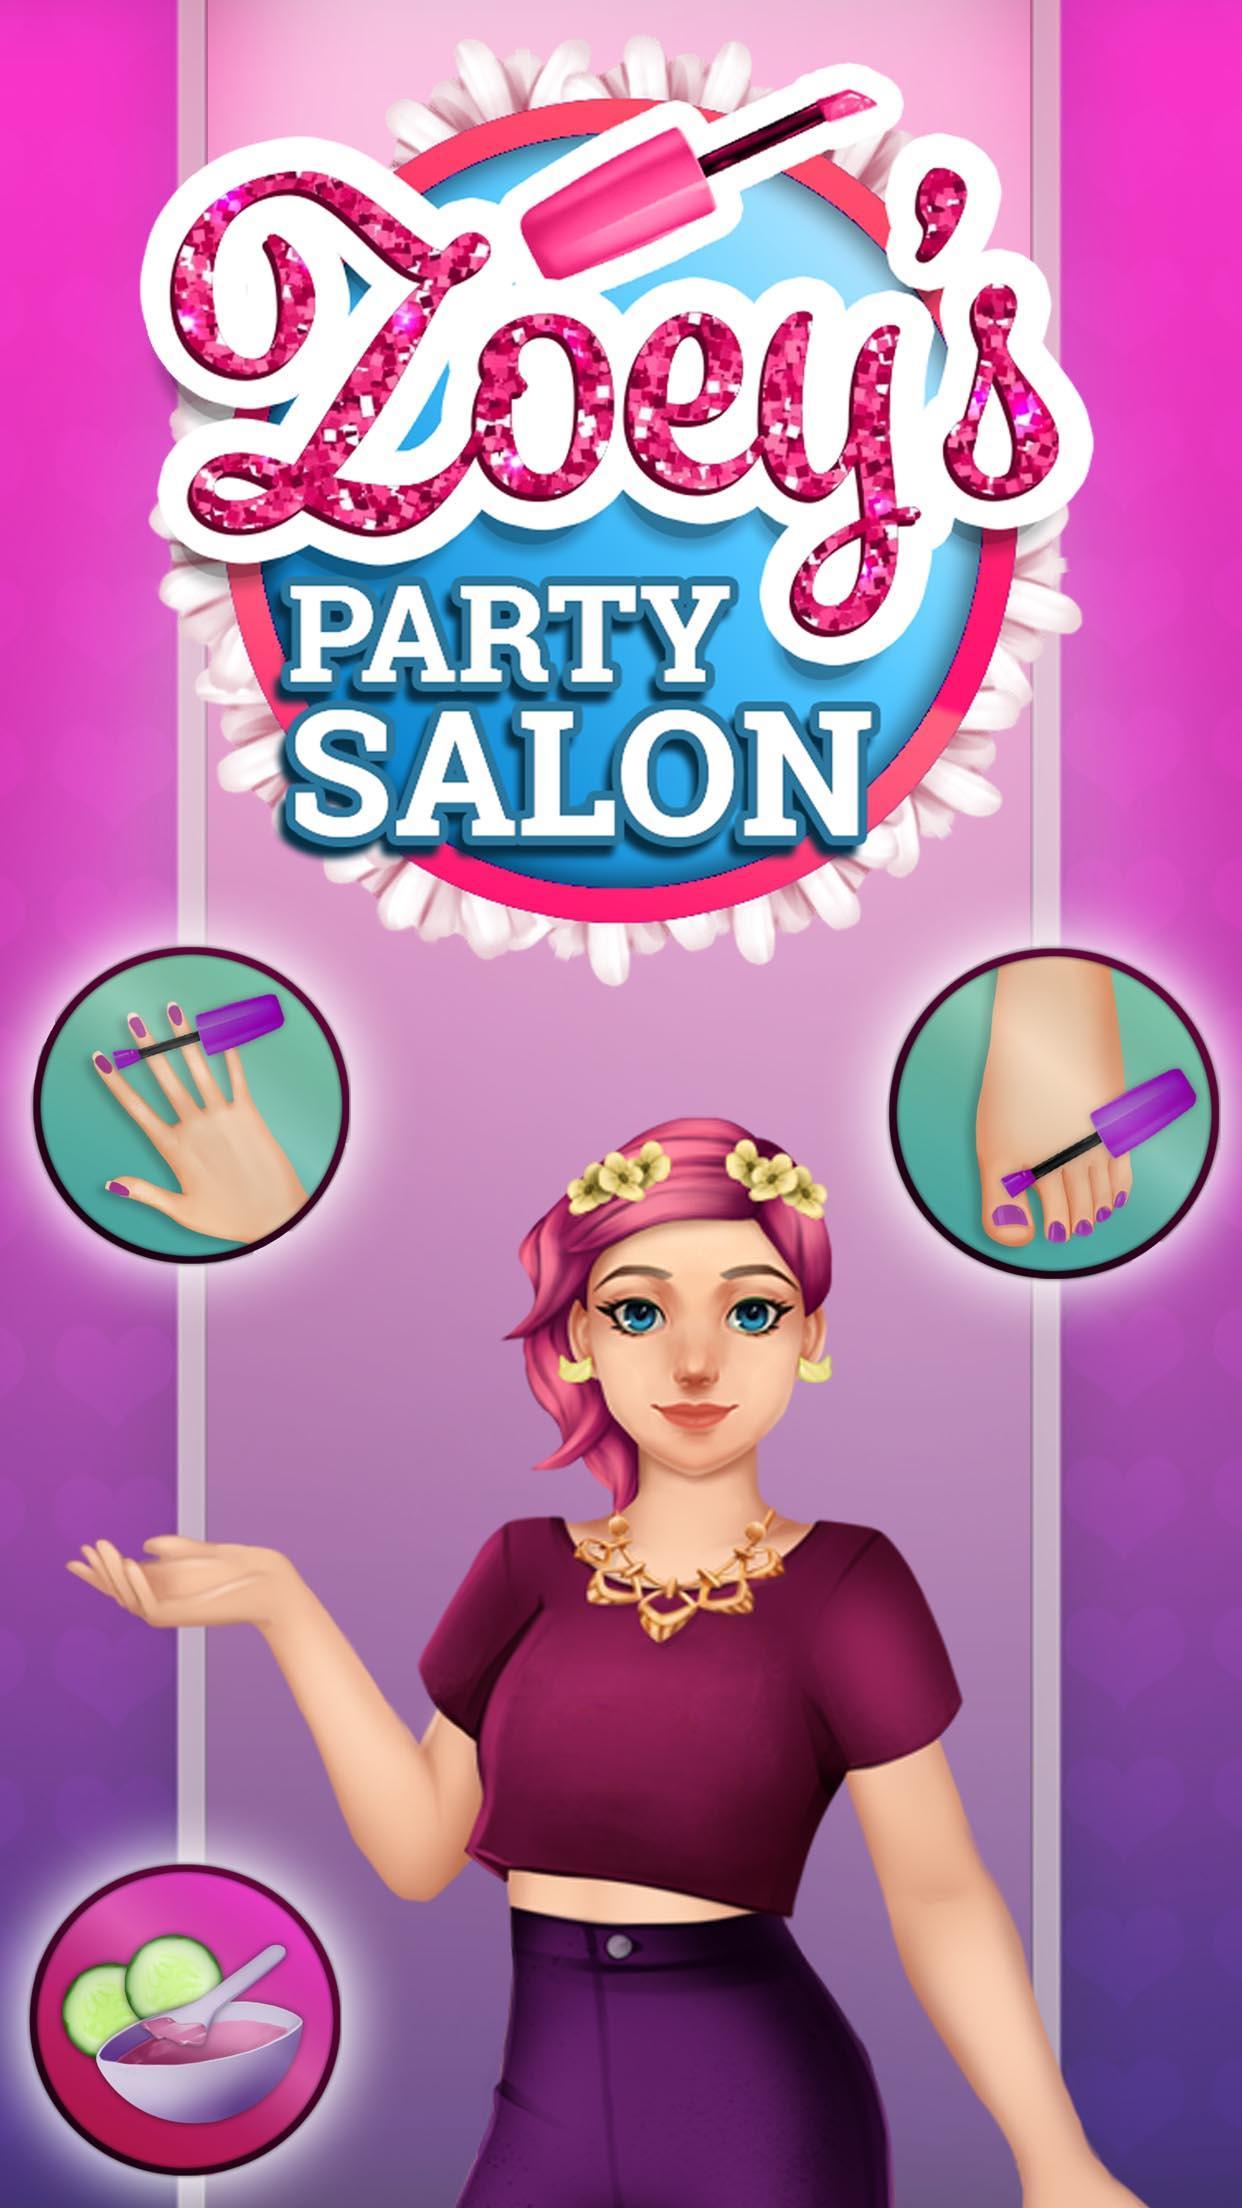 Screenshot 1 of Zoey's Party Salon - Unhas, Maquiagem, Spa e Vestir-se 1.0.23